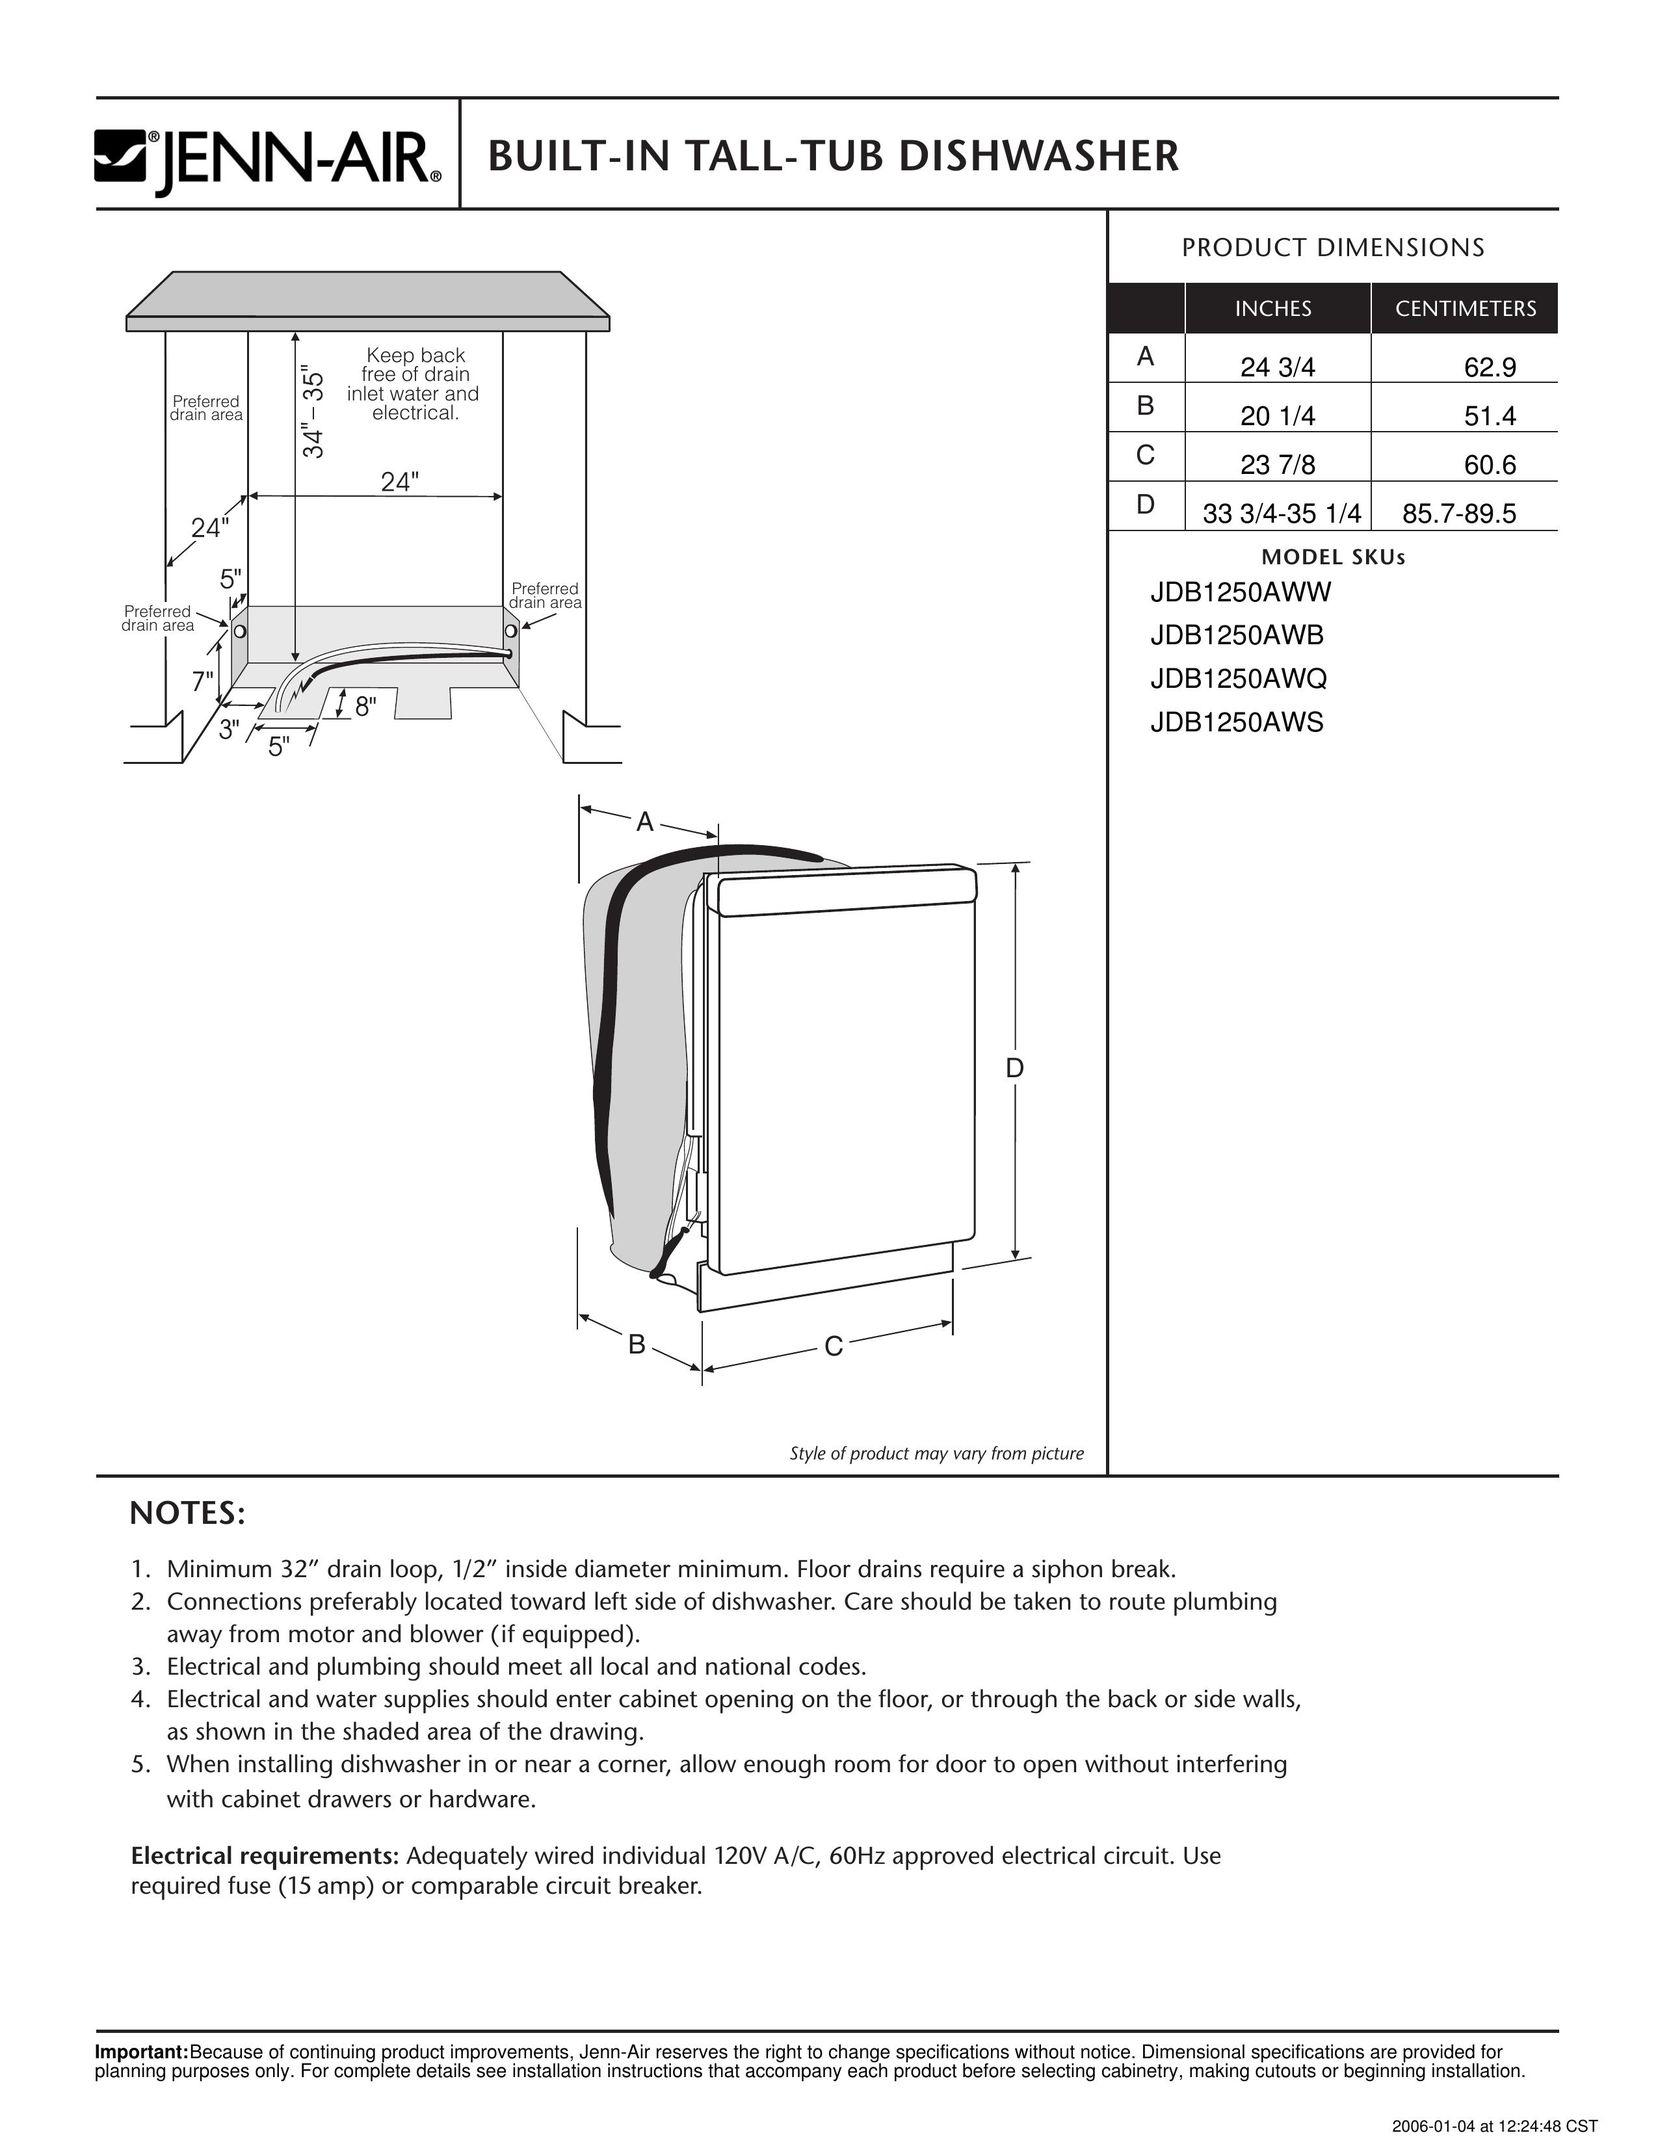 Jenn-Air JDB1250AWS Dishwasher User Manual